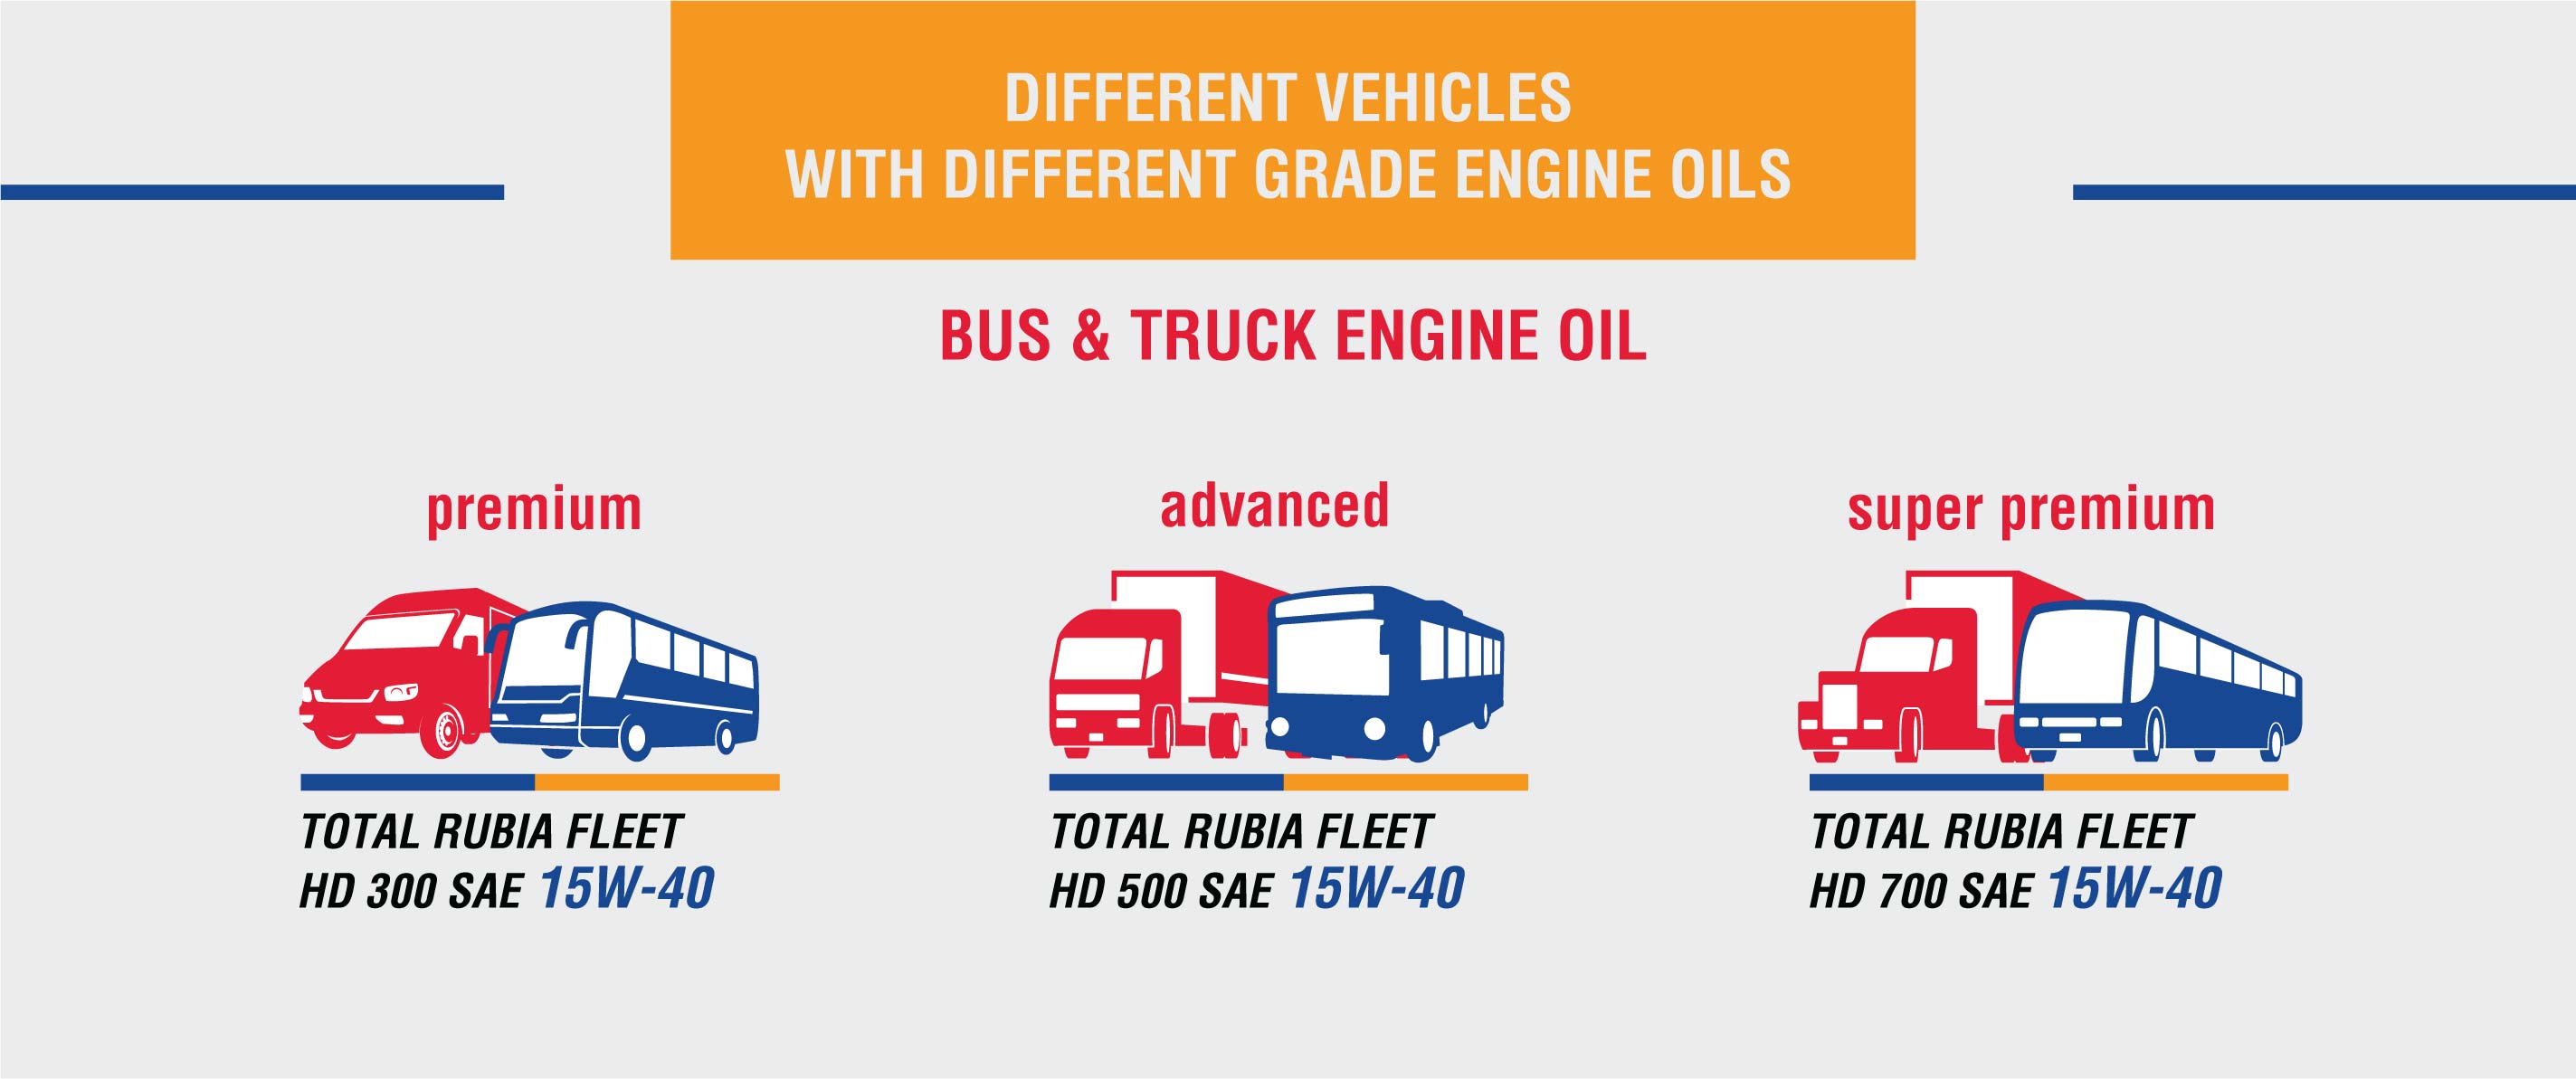 heavy duty vehicle engine oil grades